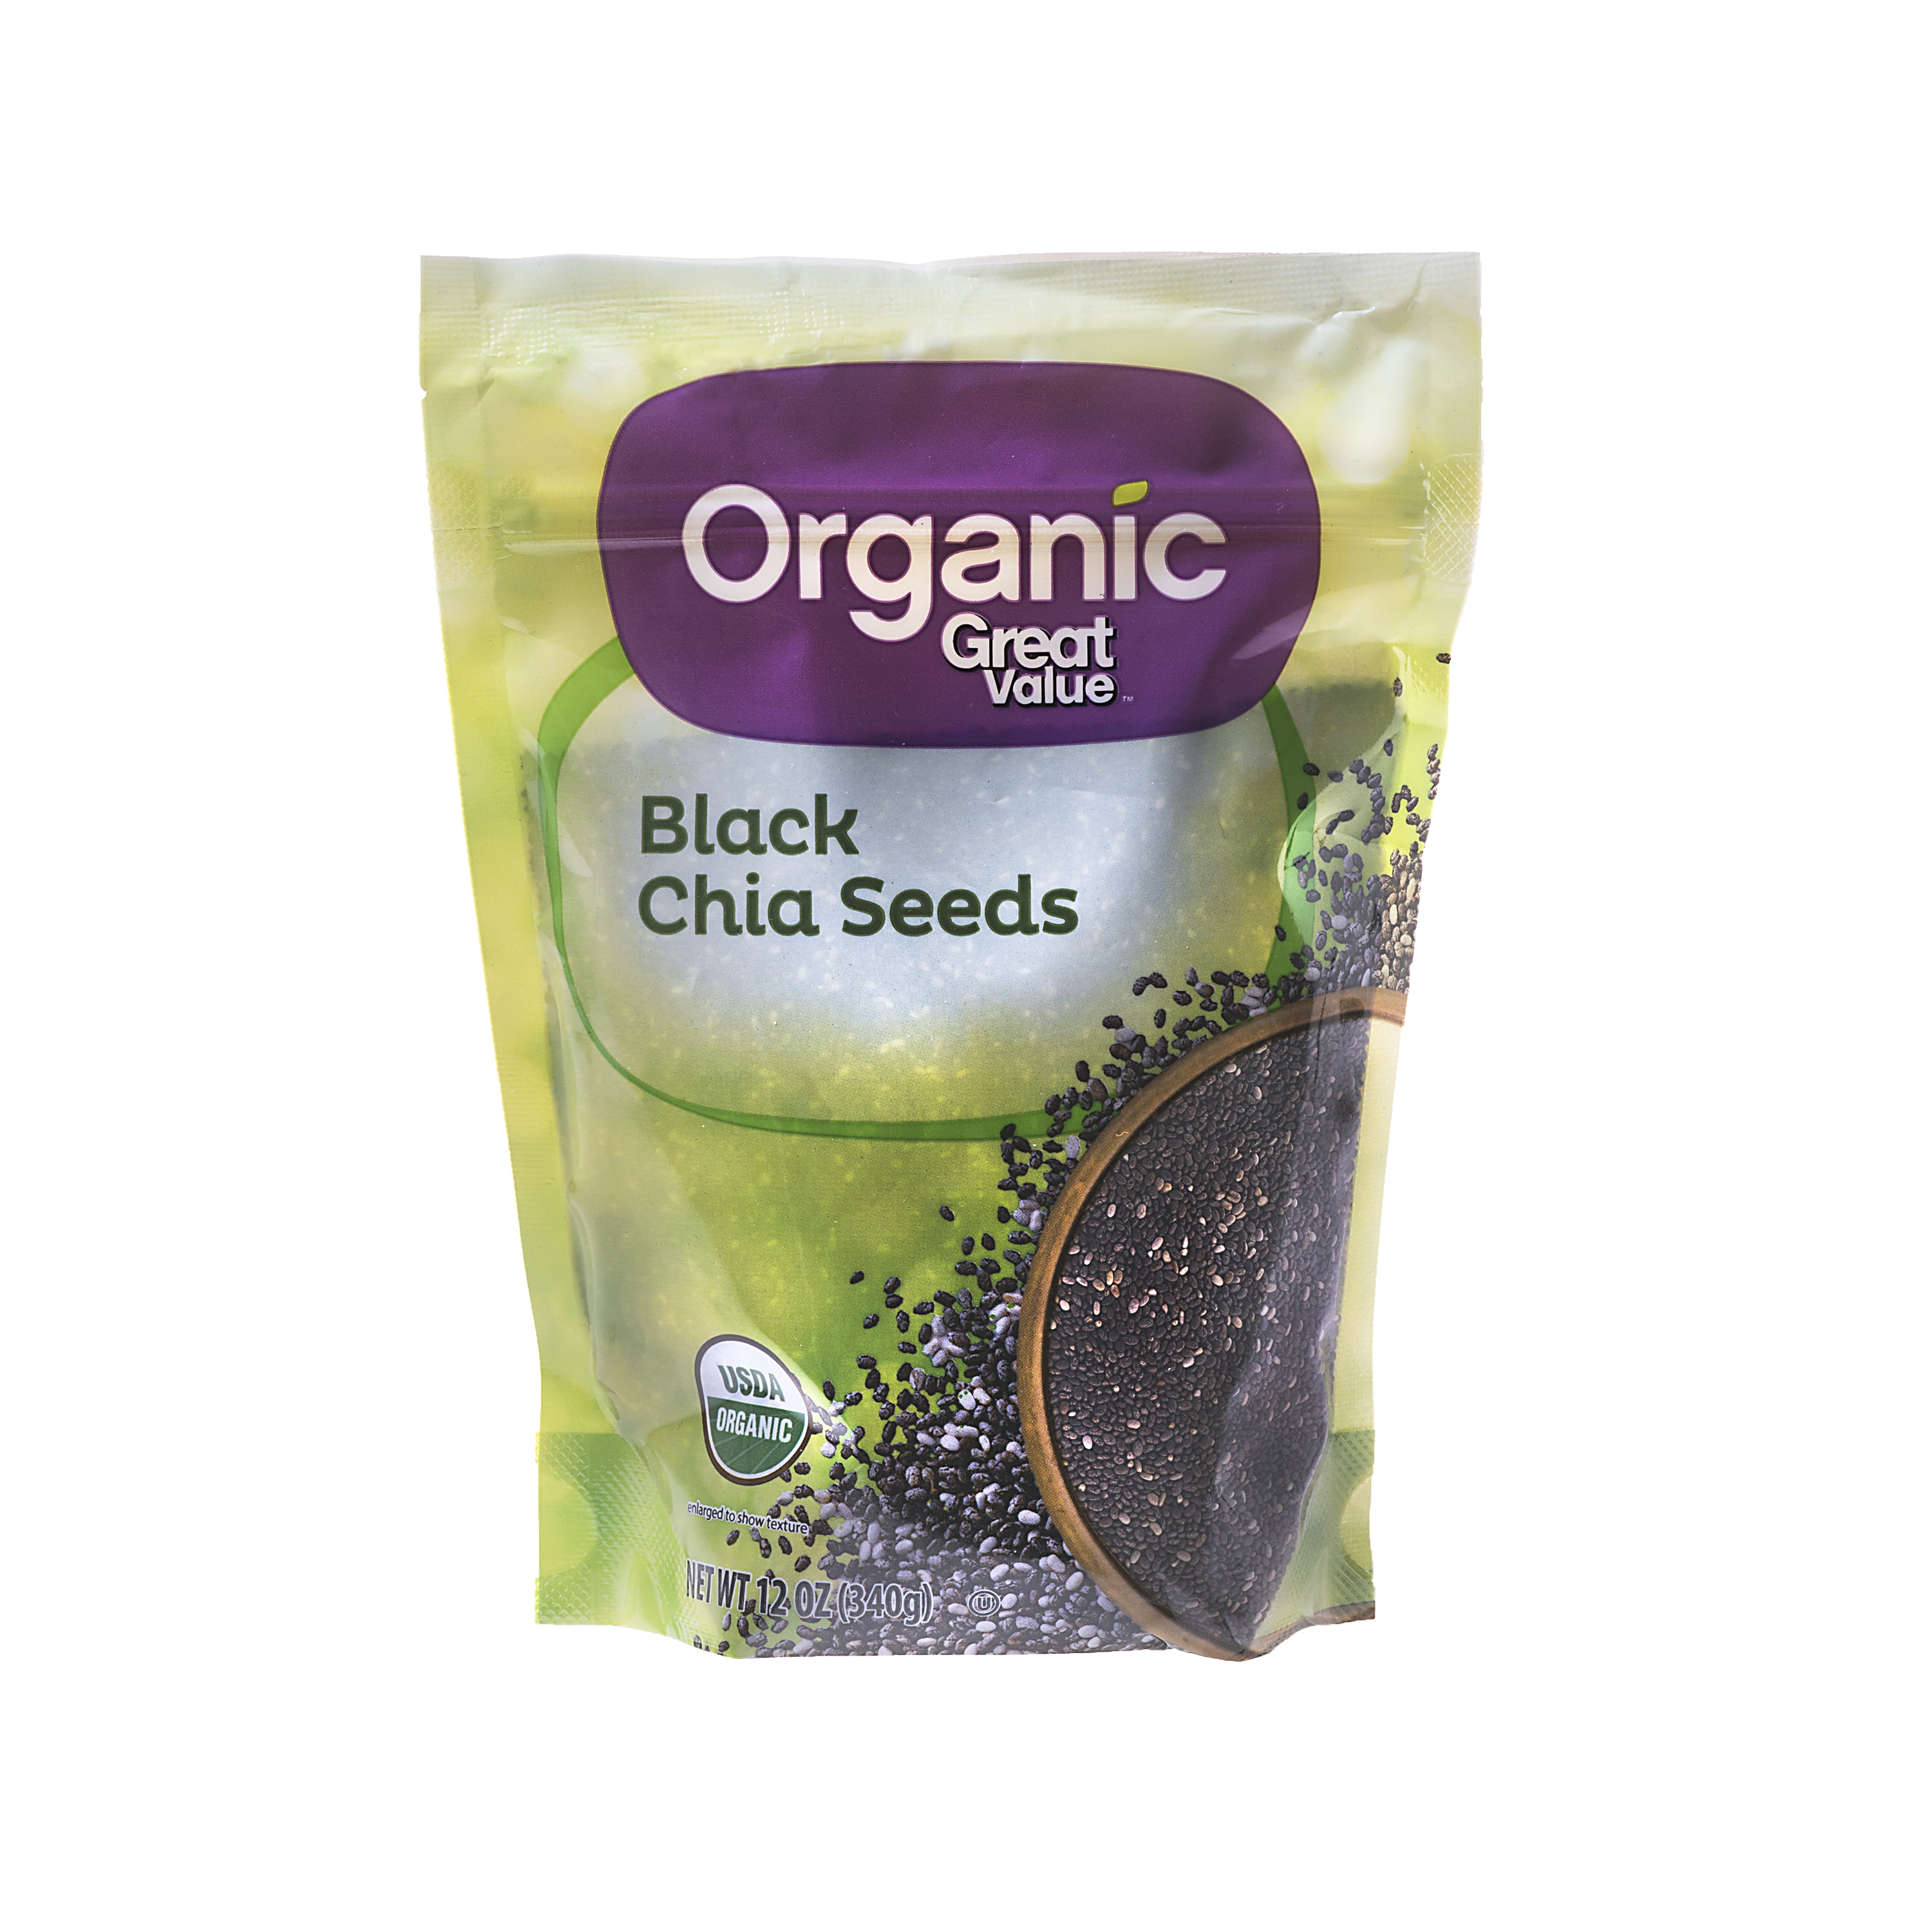 Great Value Organic Black Chia Seeds, 12 oz - Walmart.com ...